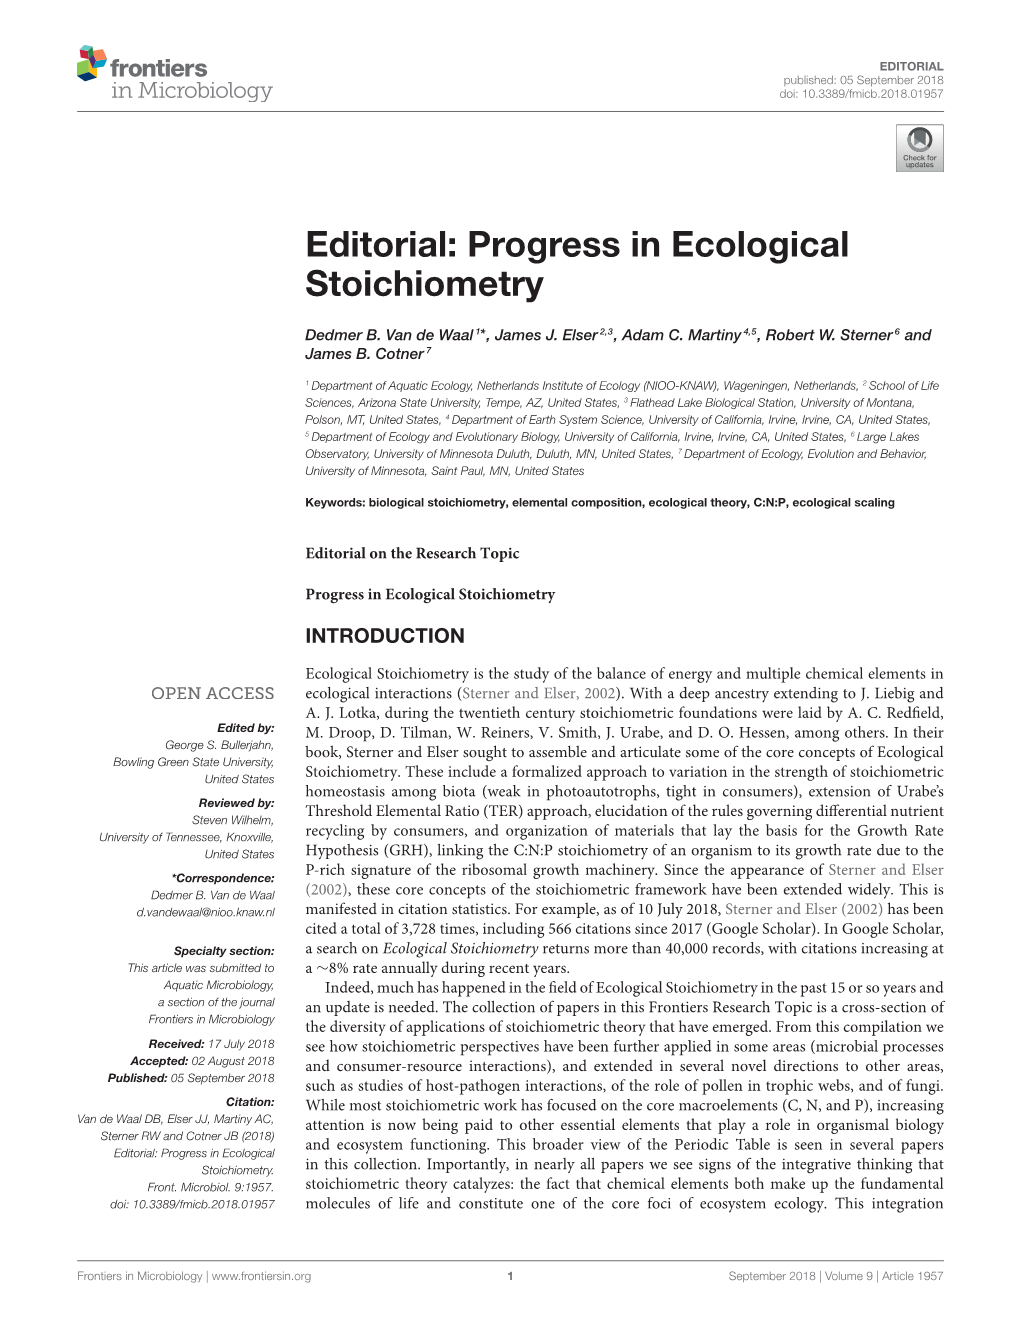 Progress in Ecological Stoichiometry